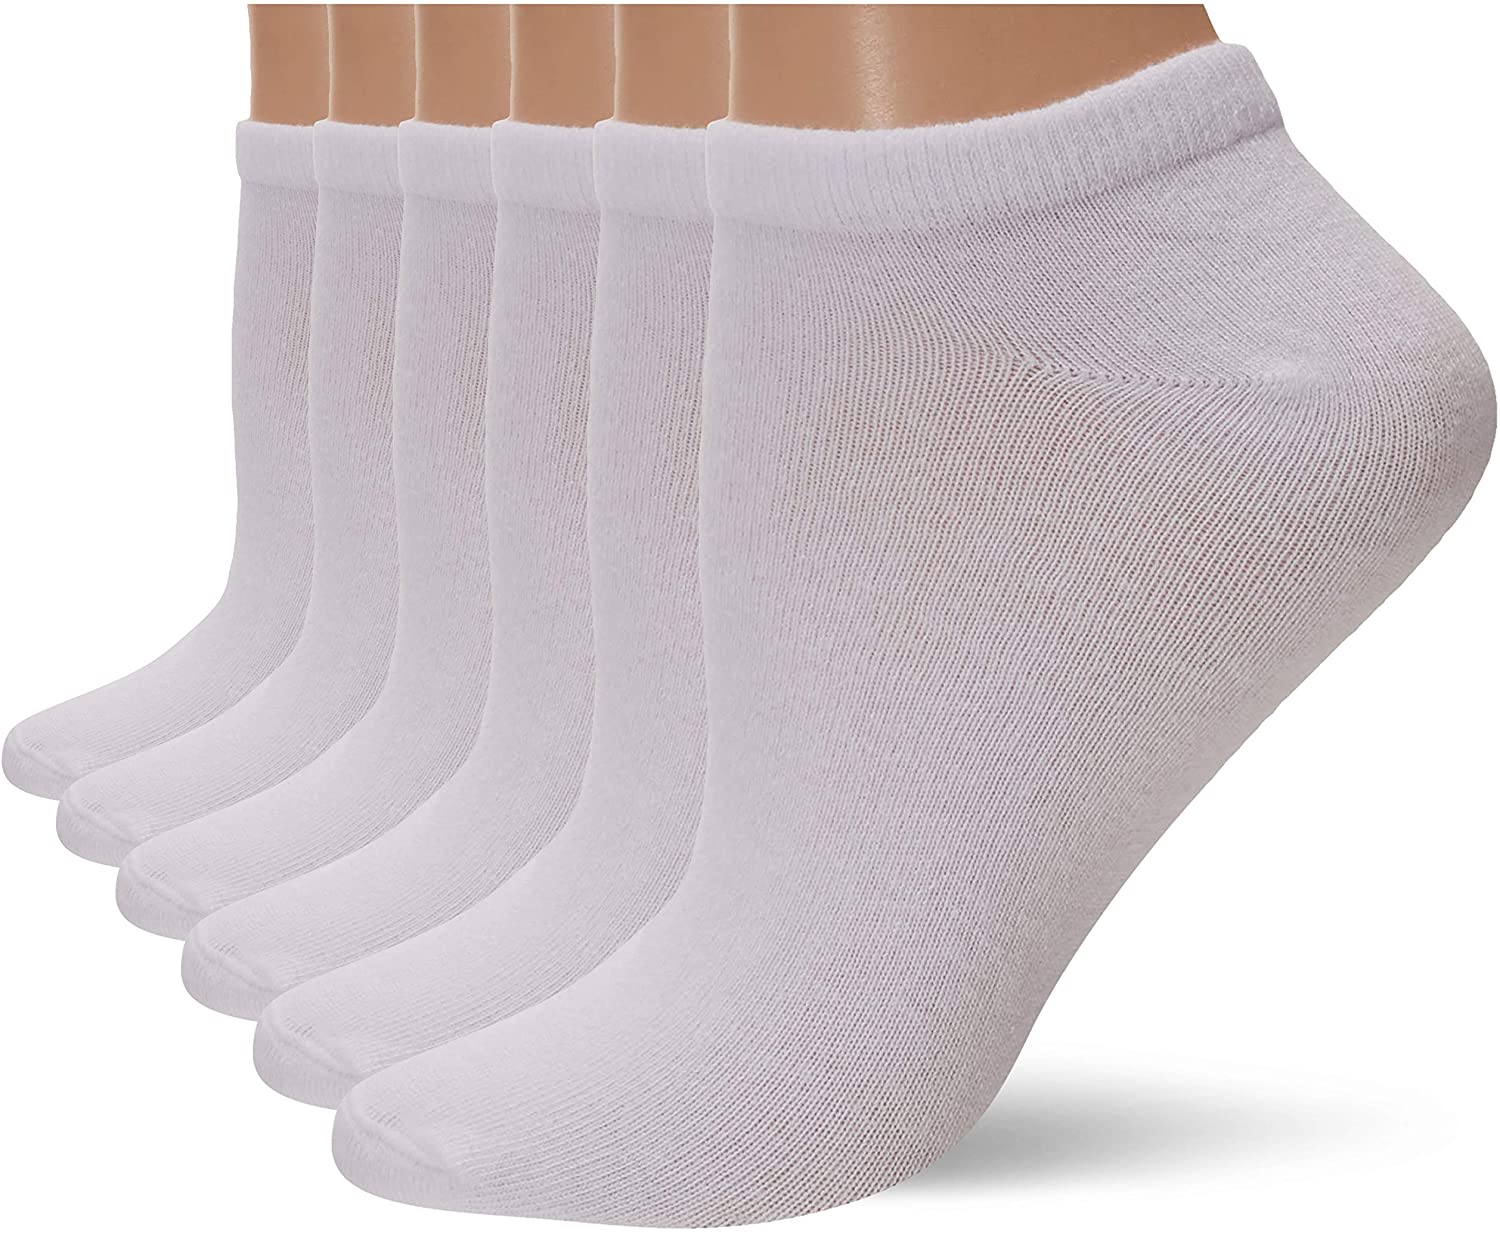 Womens 6 Pack Casual Low Cut Socks